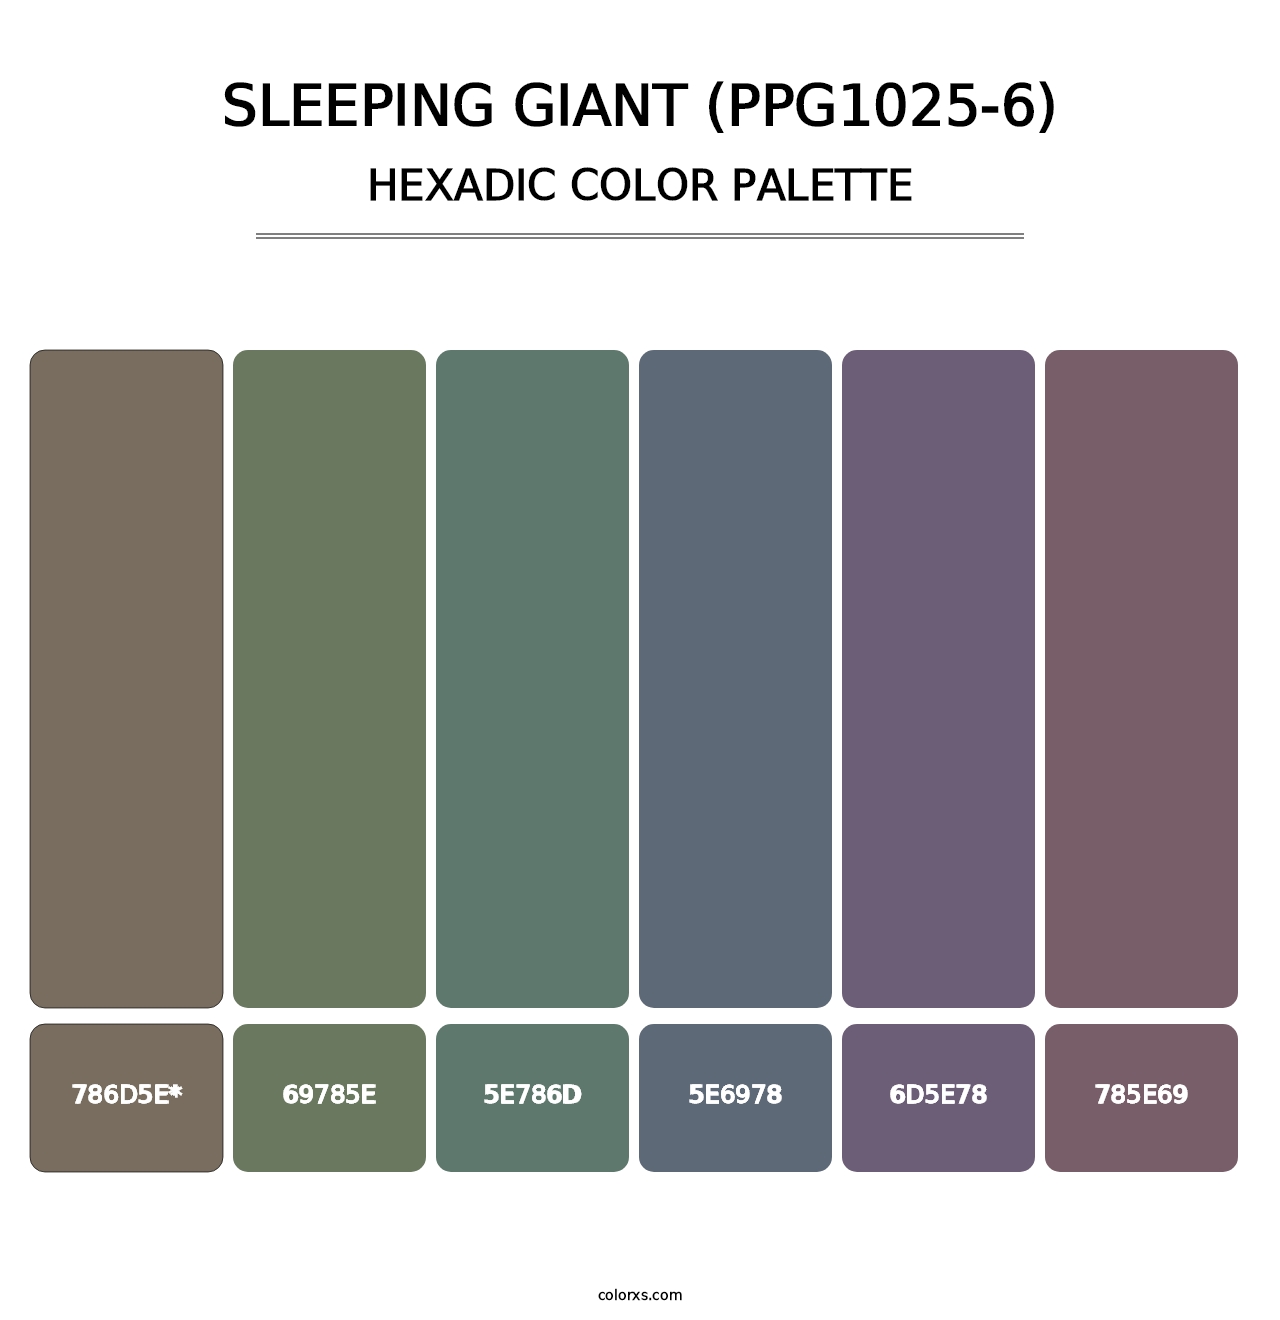 Sleeping Giant (PPG1025-6) - Hexadic Color Palette